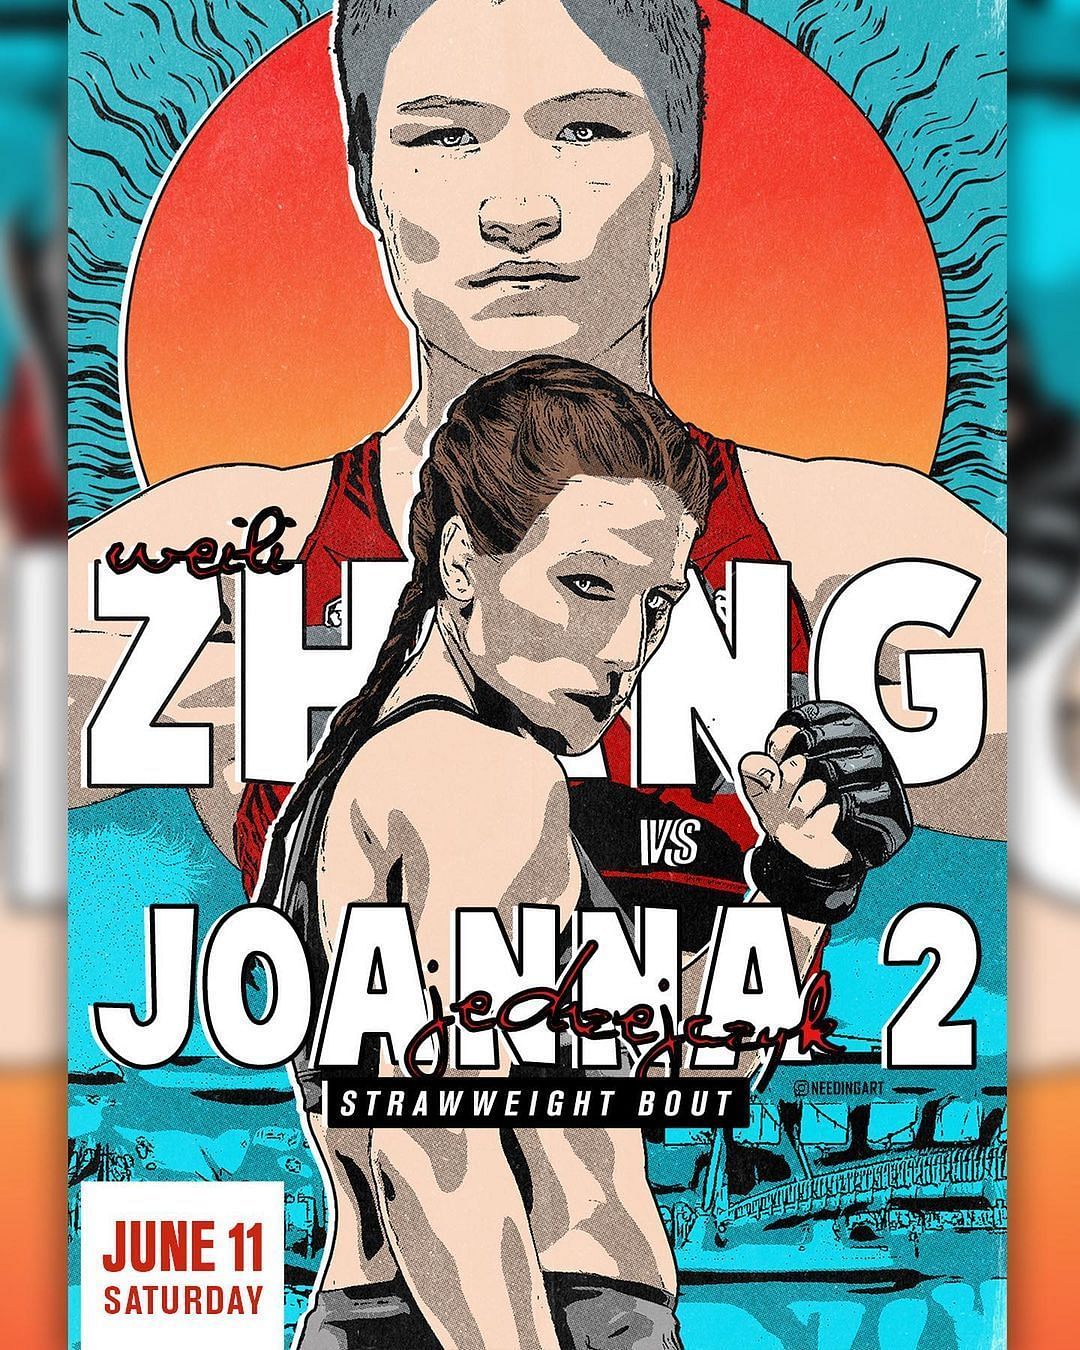 Zhang Weili vs. Joanna Jędrzejczyk 2 fan-made poster [Image via @needingart on Instagram]